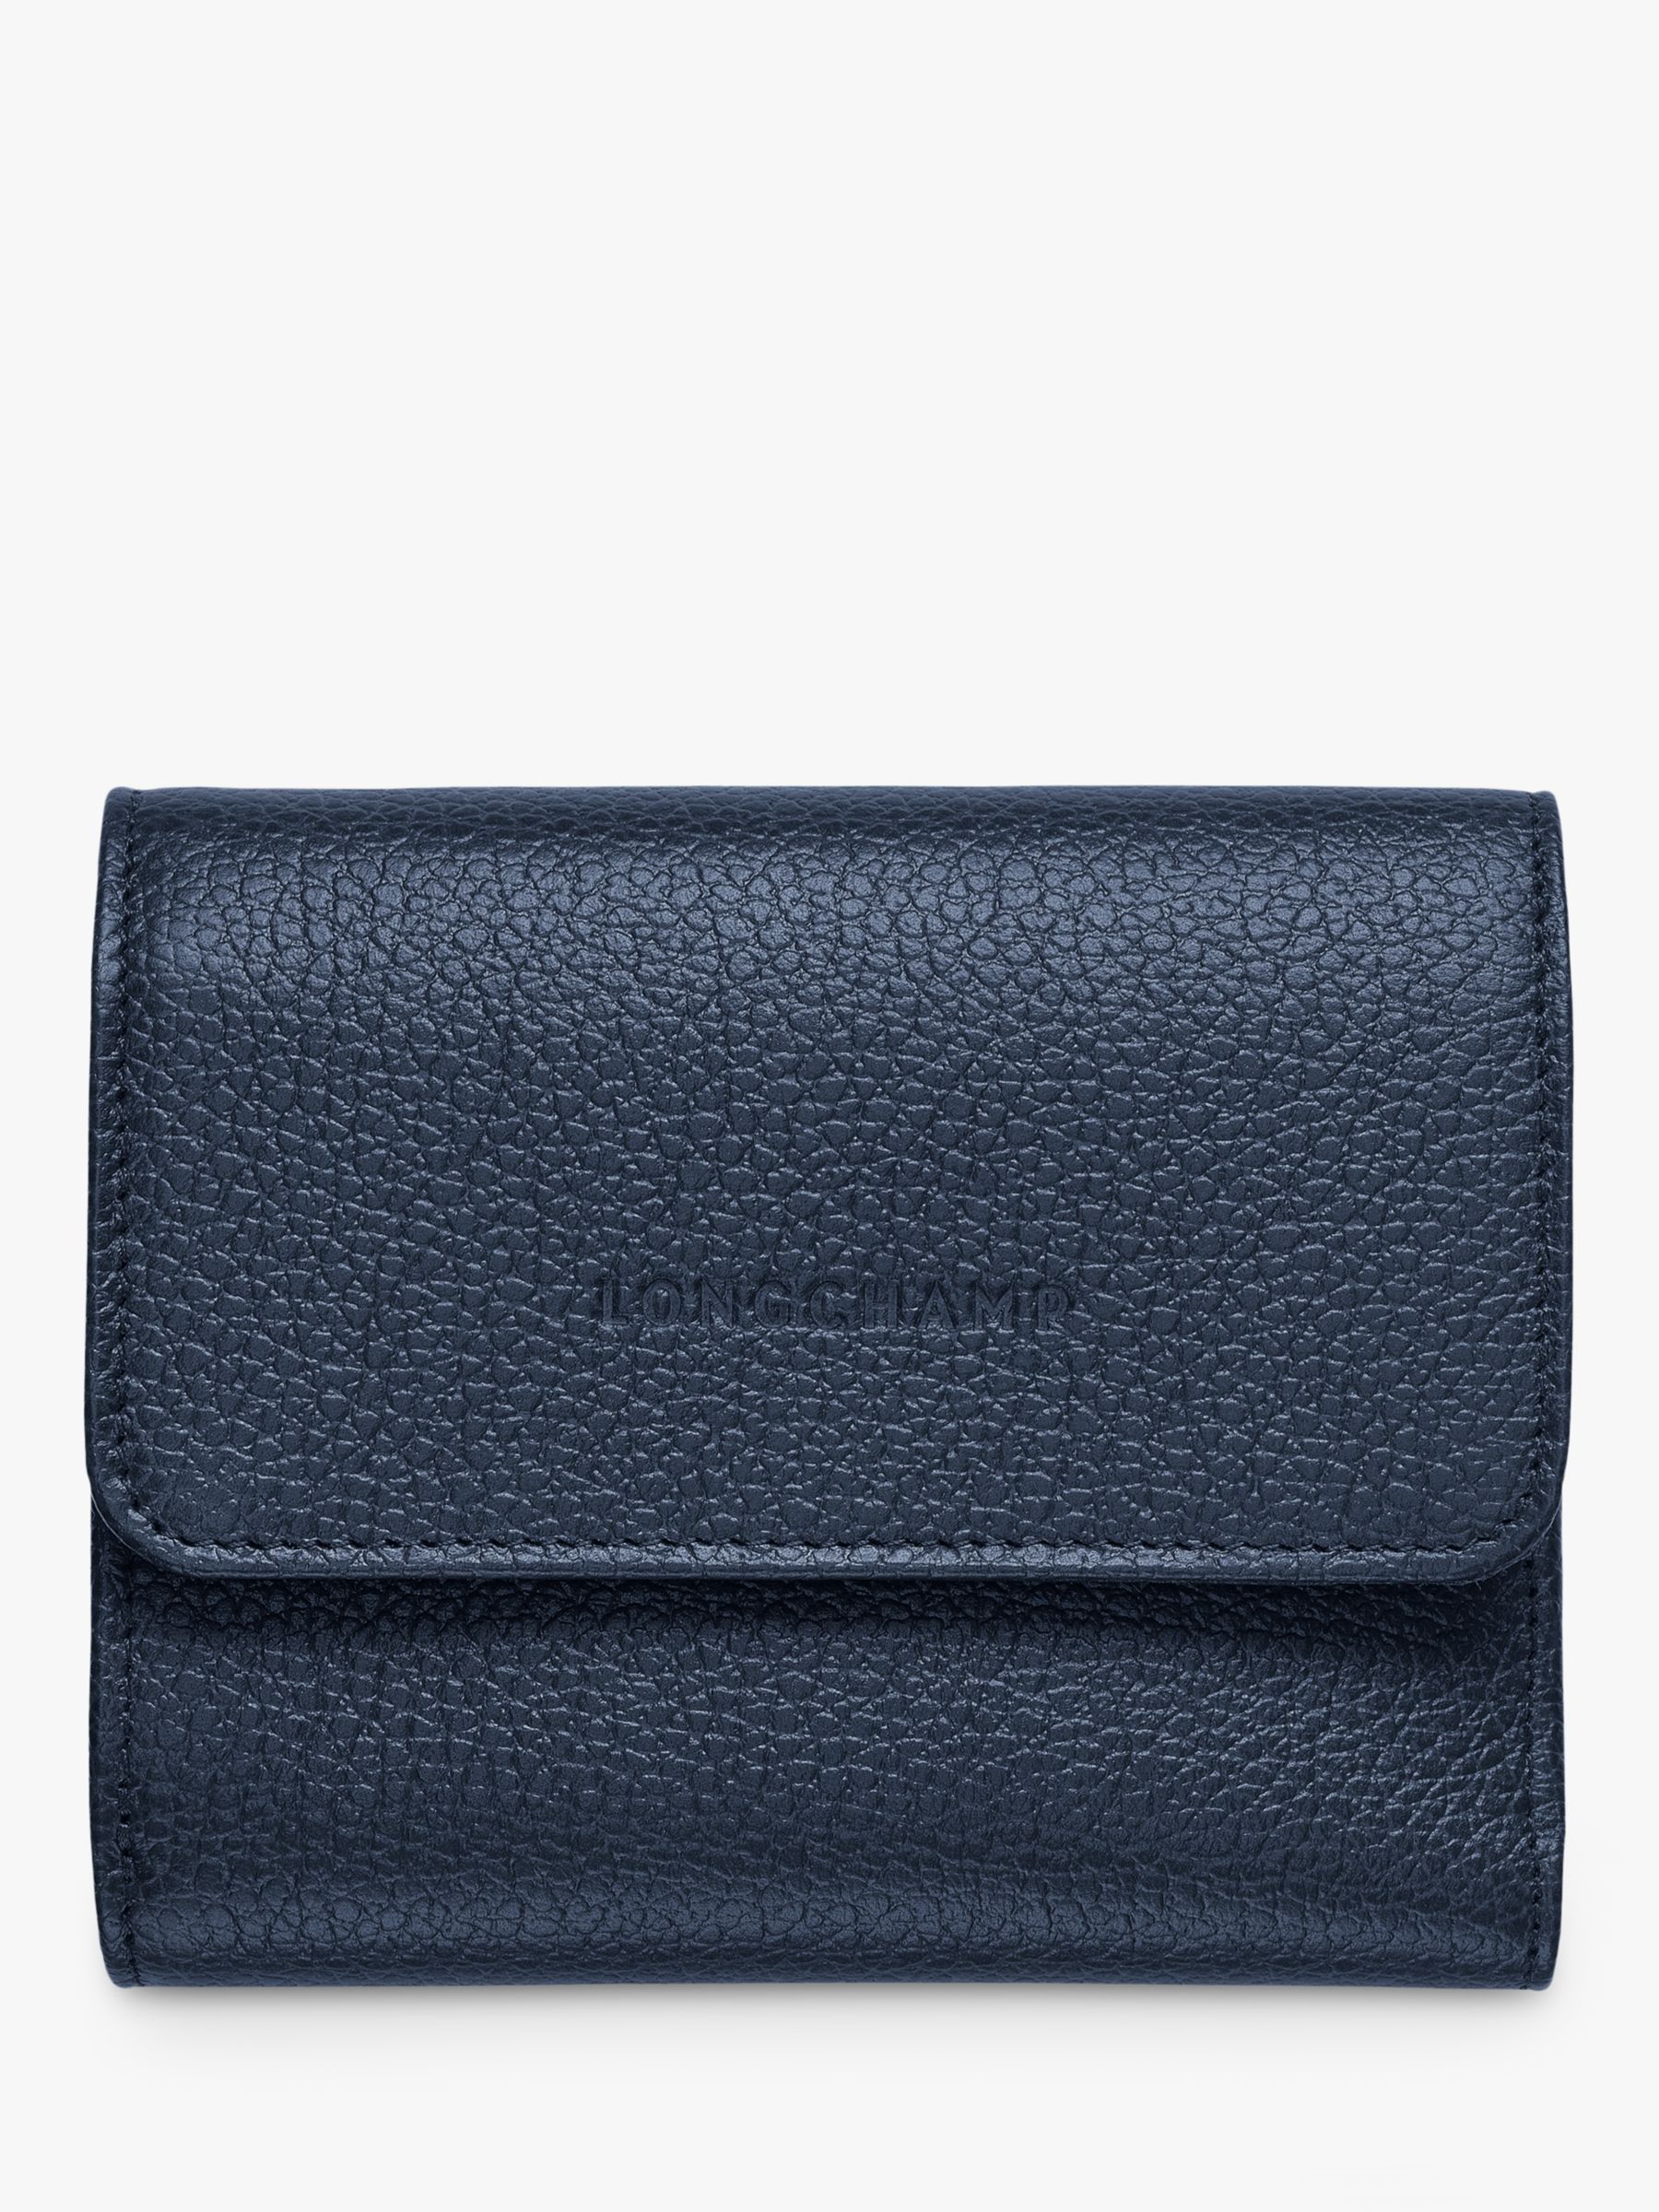 Longchamp Le Foulonné Compact Leather Wallet, Navy at John Lewis & Partners